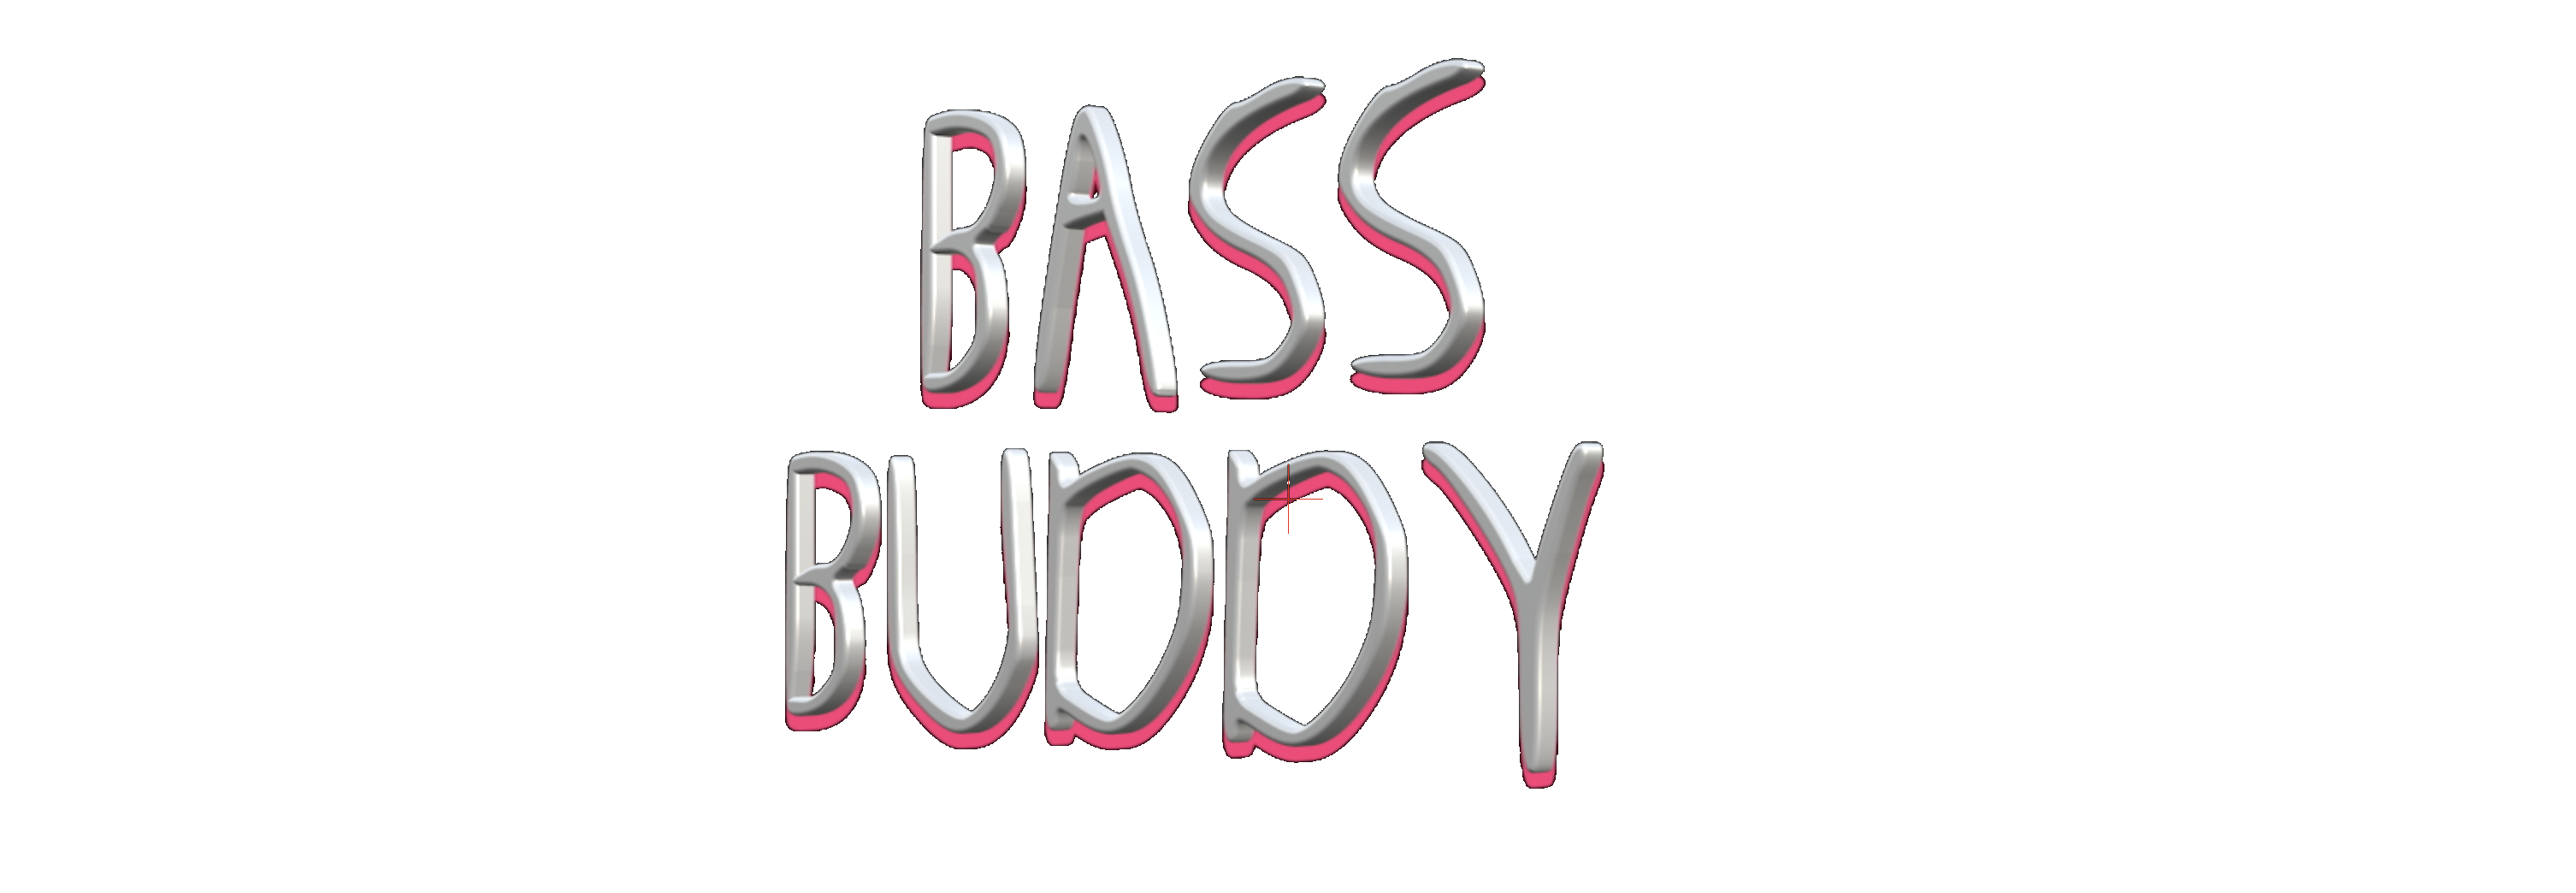 Bass Buddy